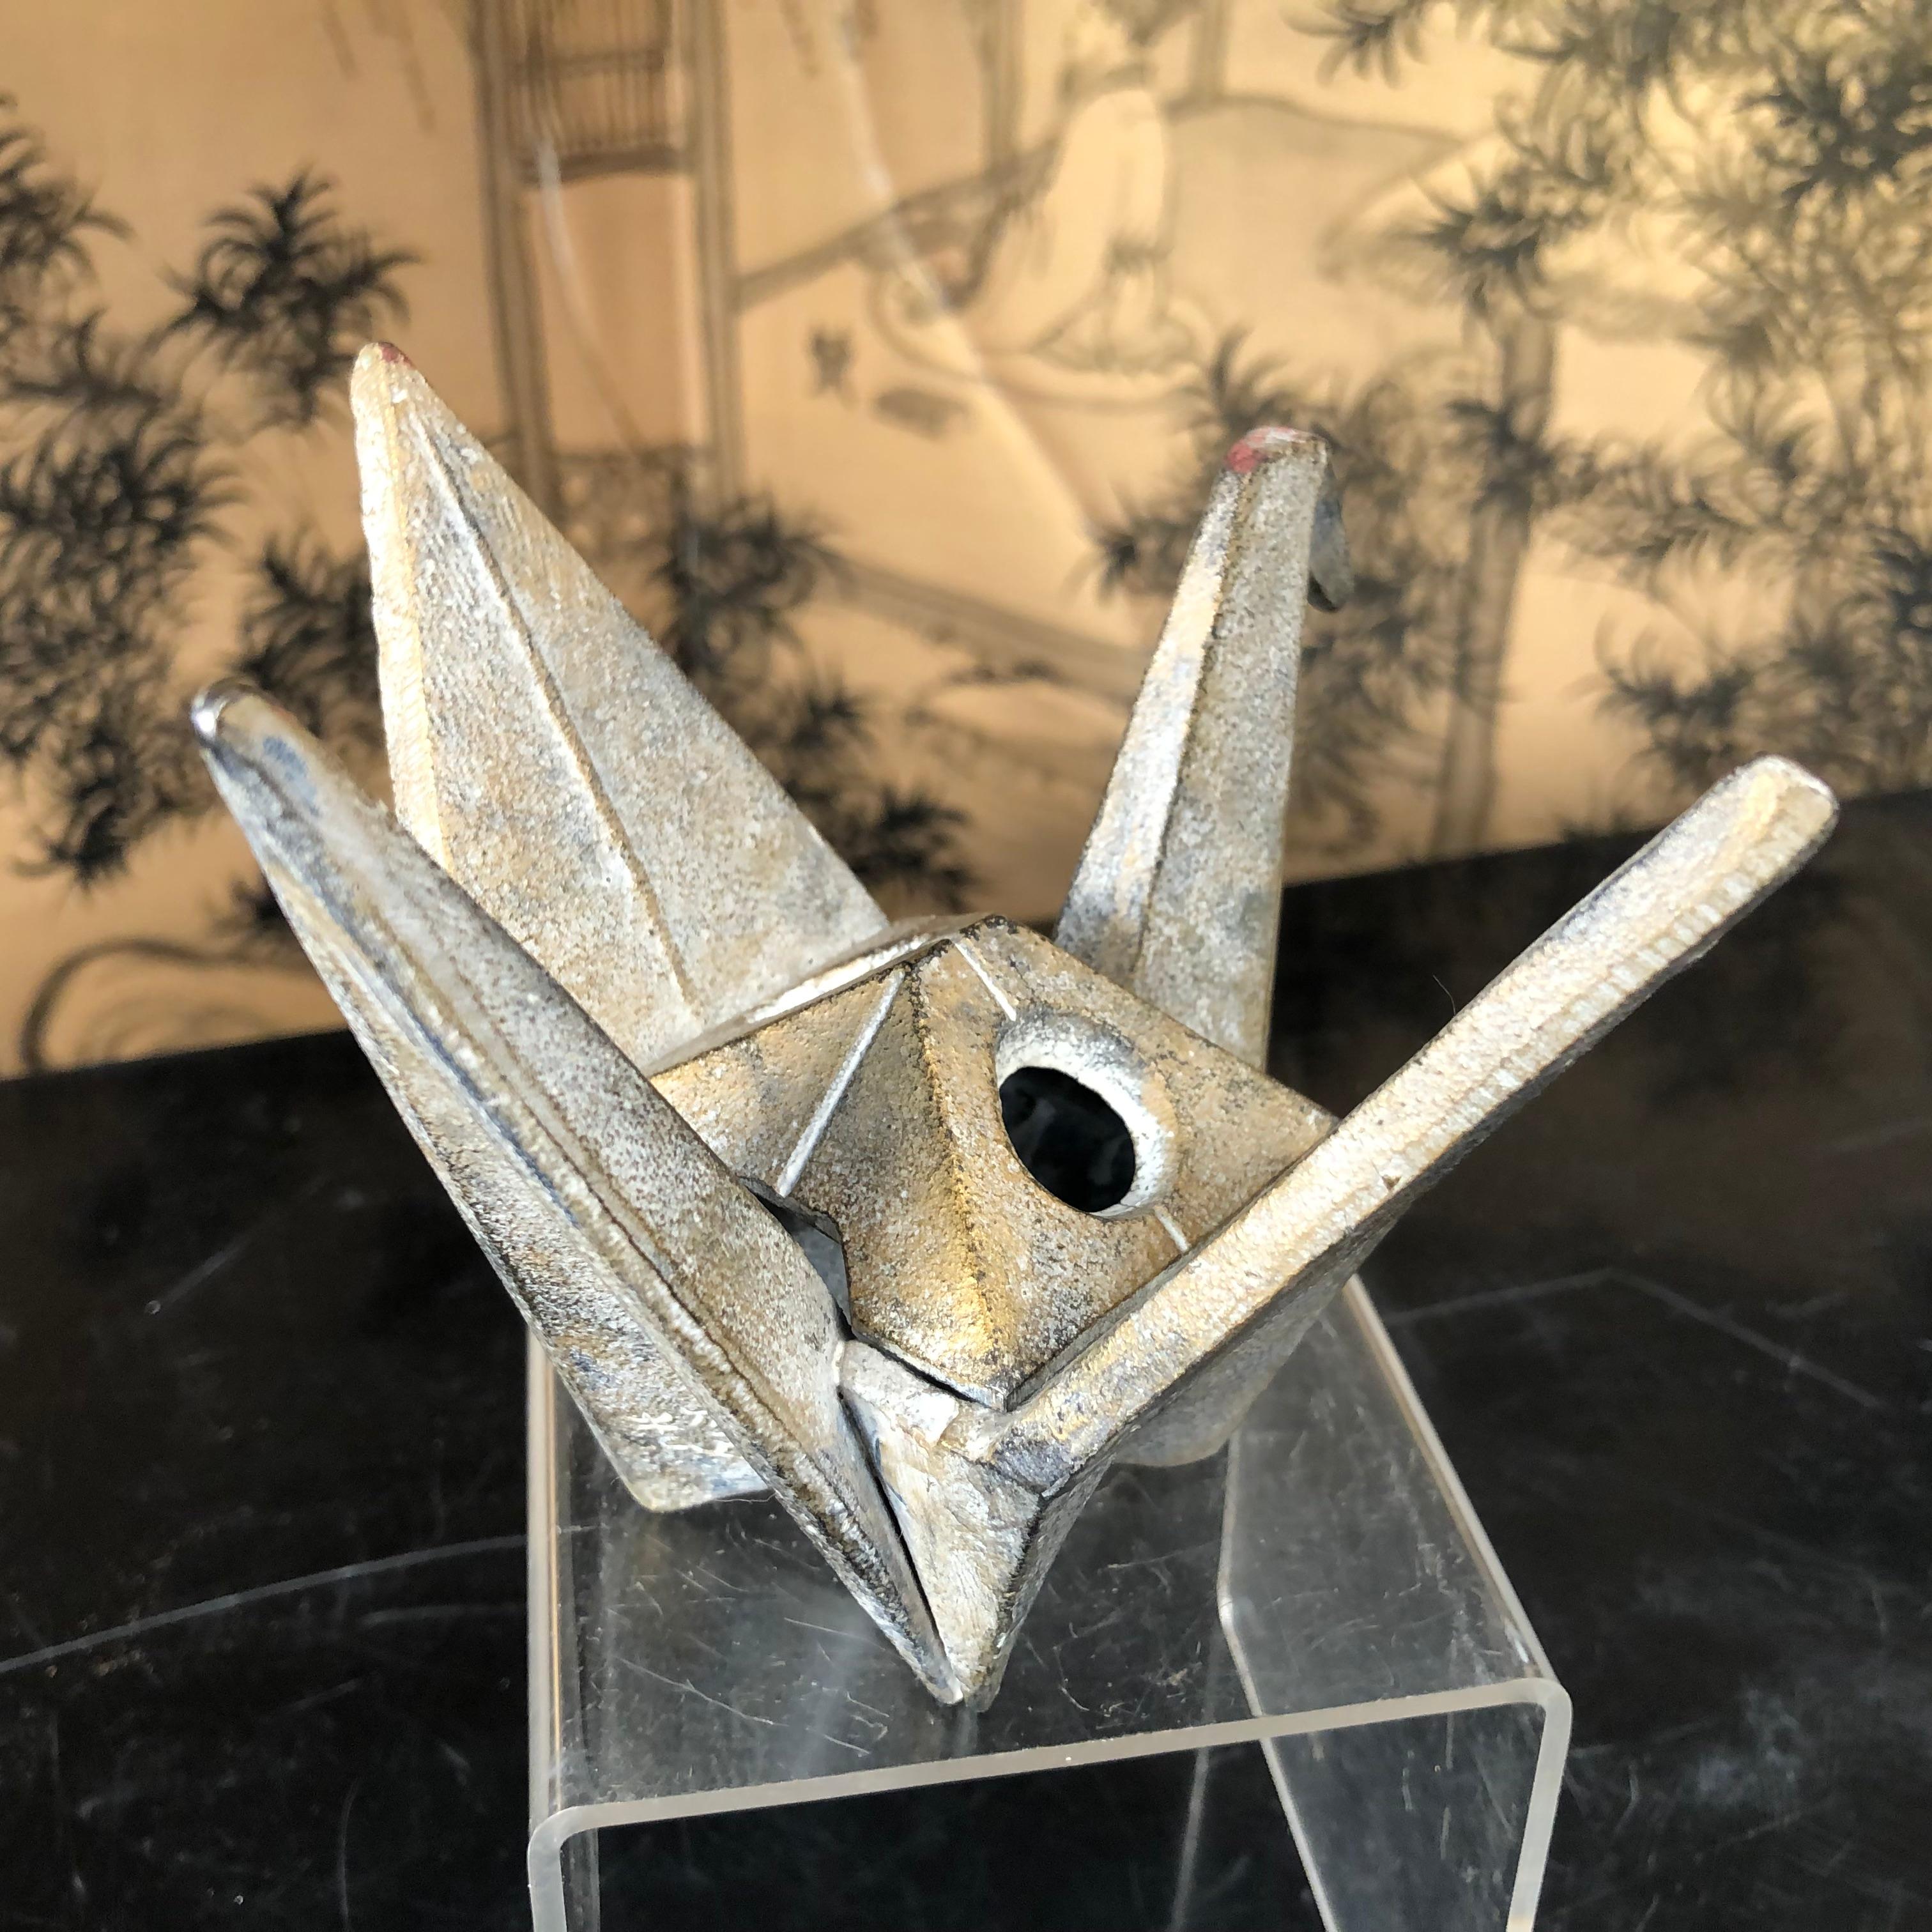 Japanese Origami Crane Sculpture by Famous Artist Sotaro 2